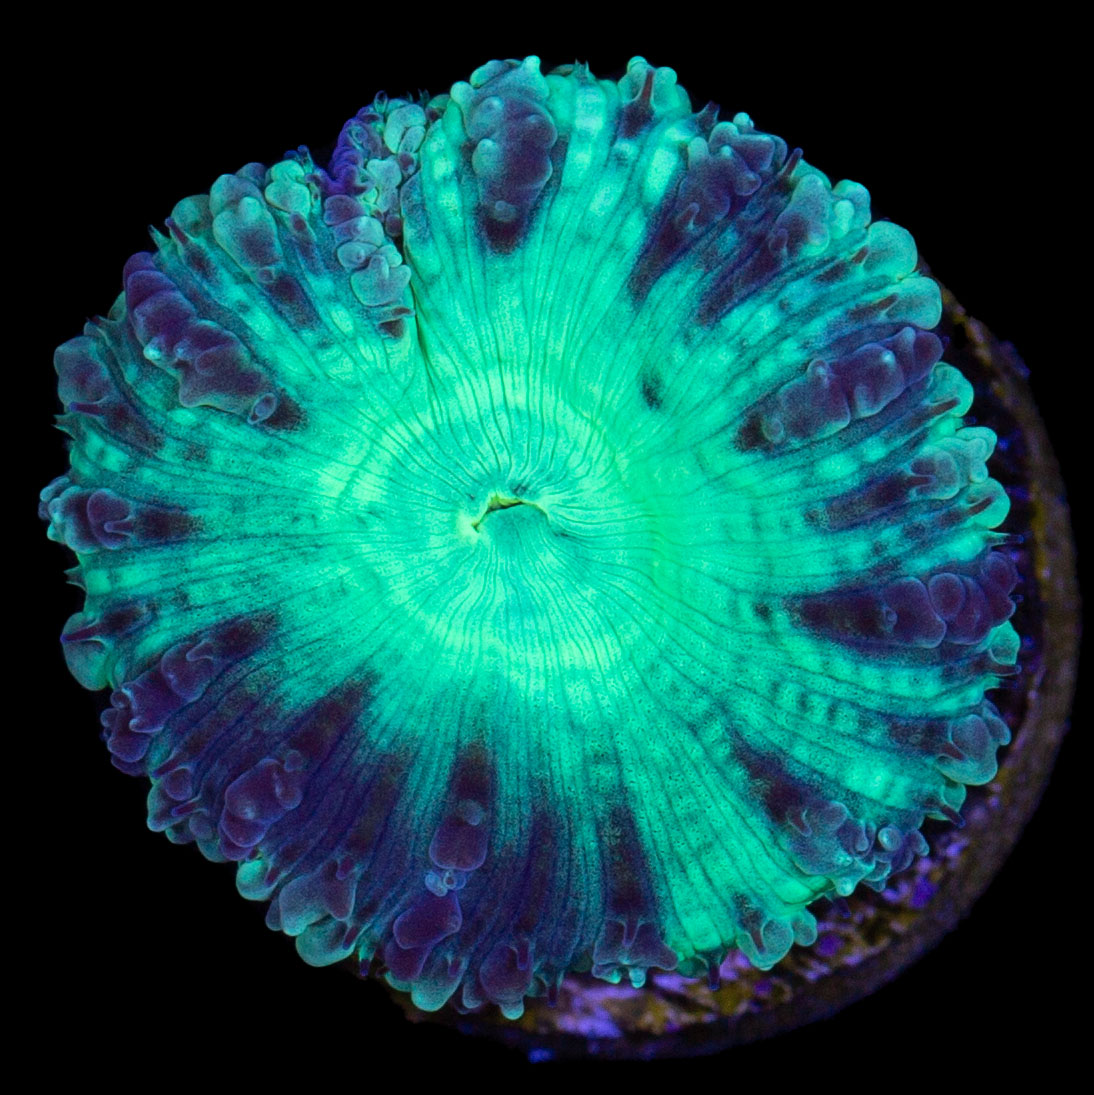 Nuclear Green Blastomussa Wellsi Coral